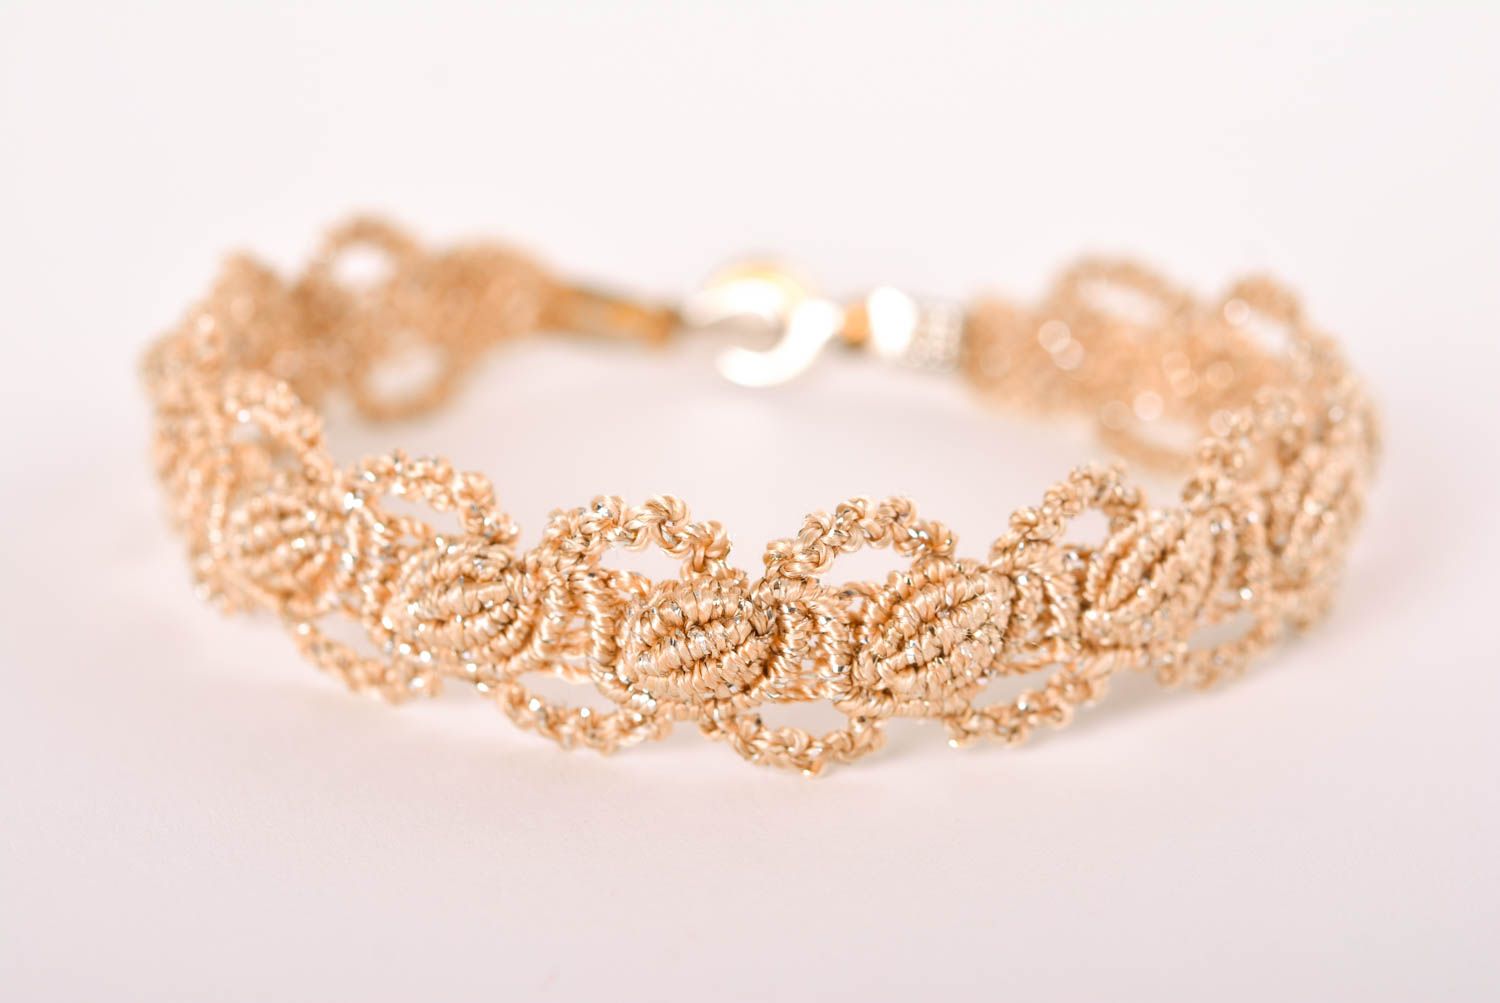 Stylish handmade macrame bracelet woven thread bracelet textile jewelry designs photo 1